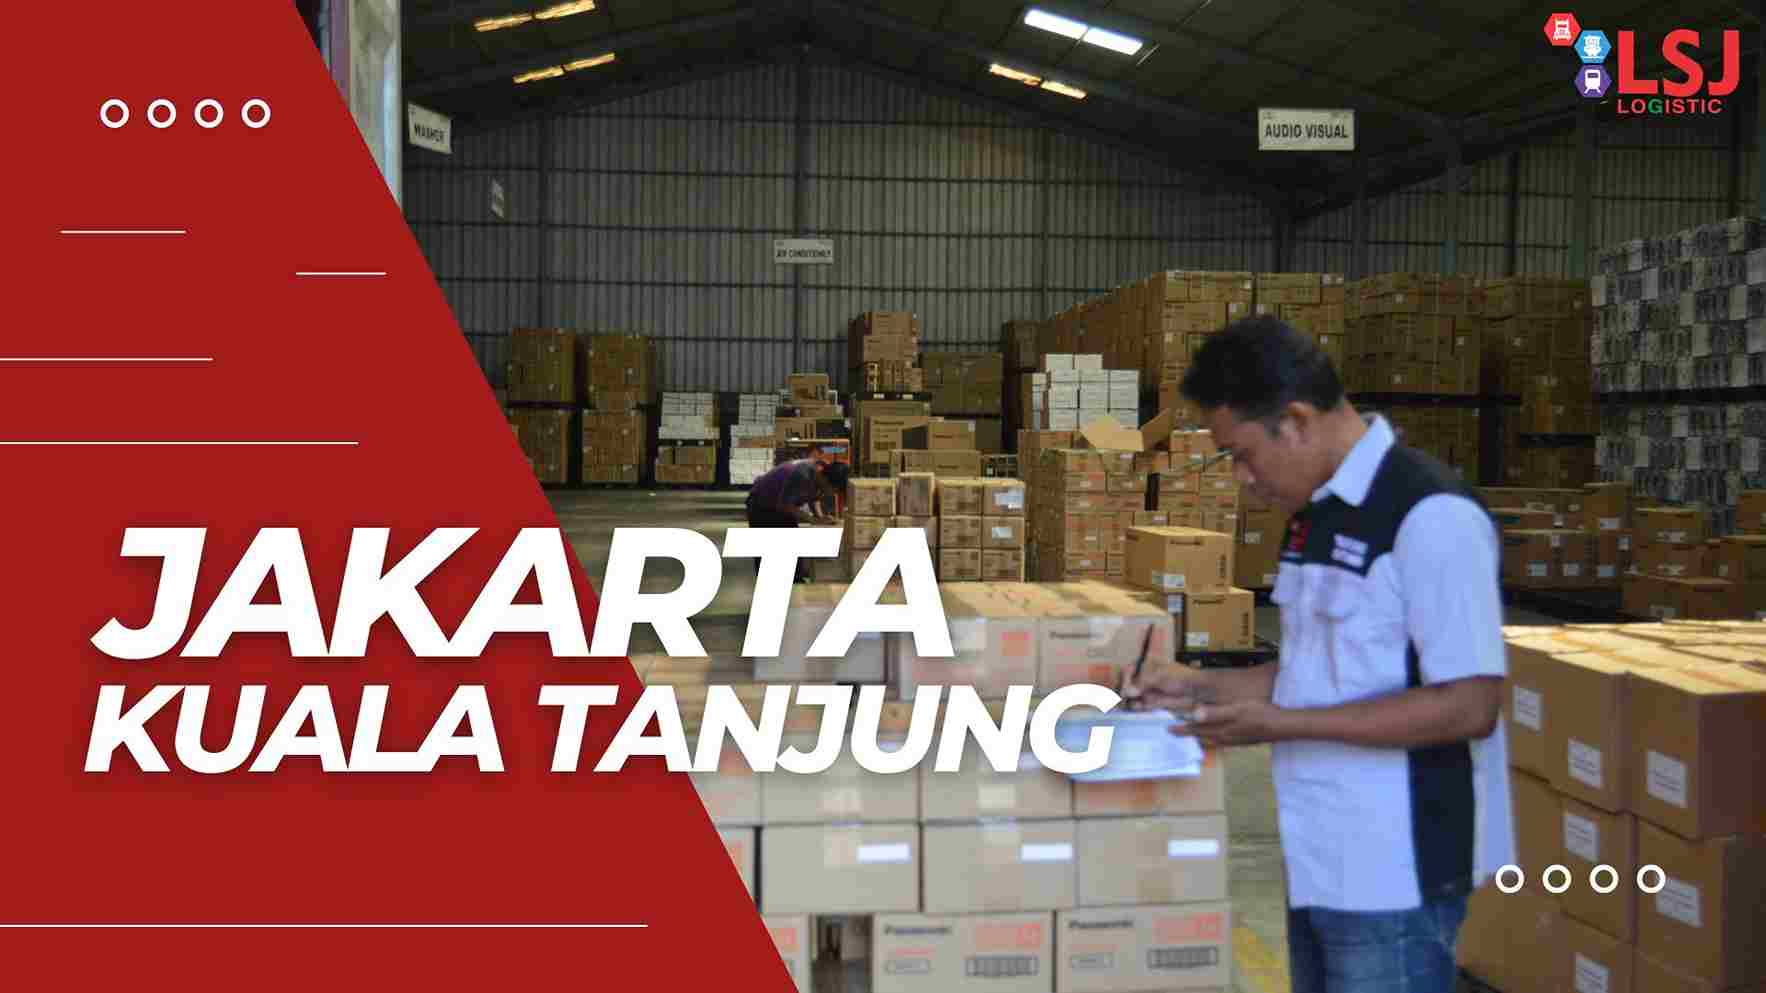 Ekspedisi Container Jakarta Kuala Tanjung Murah